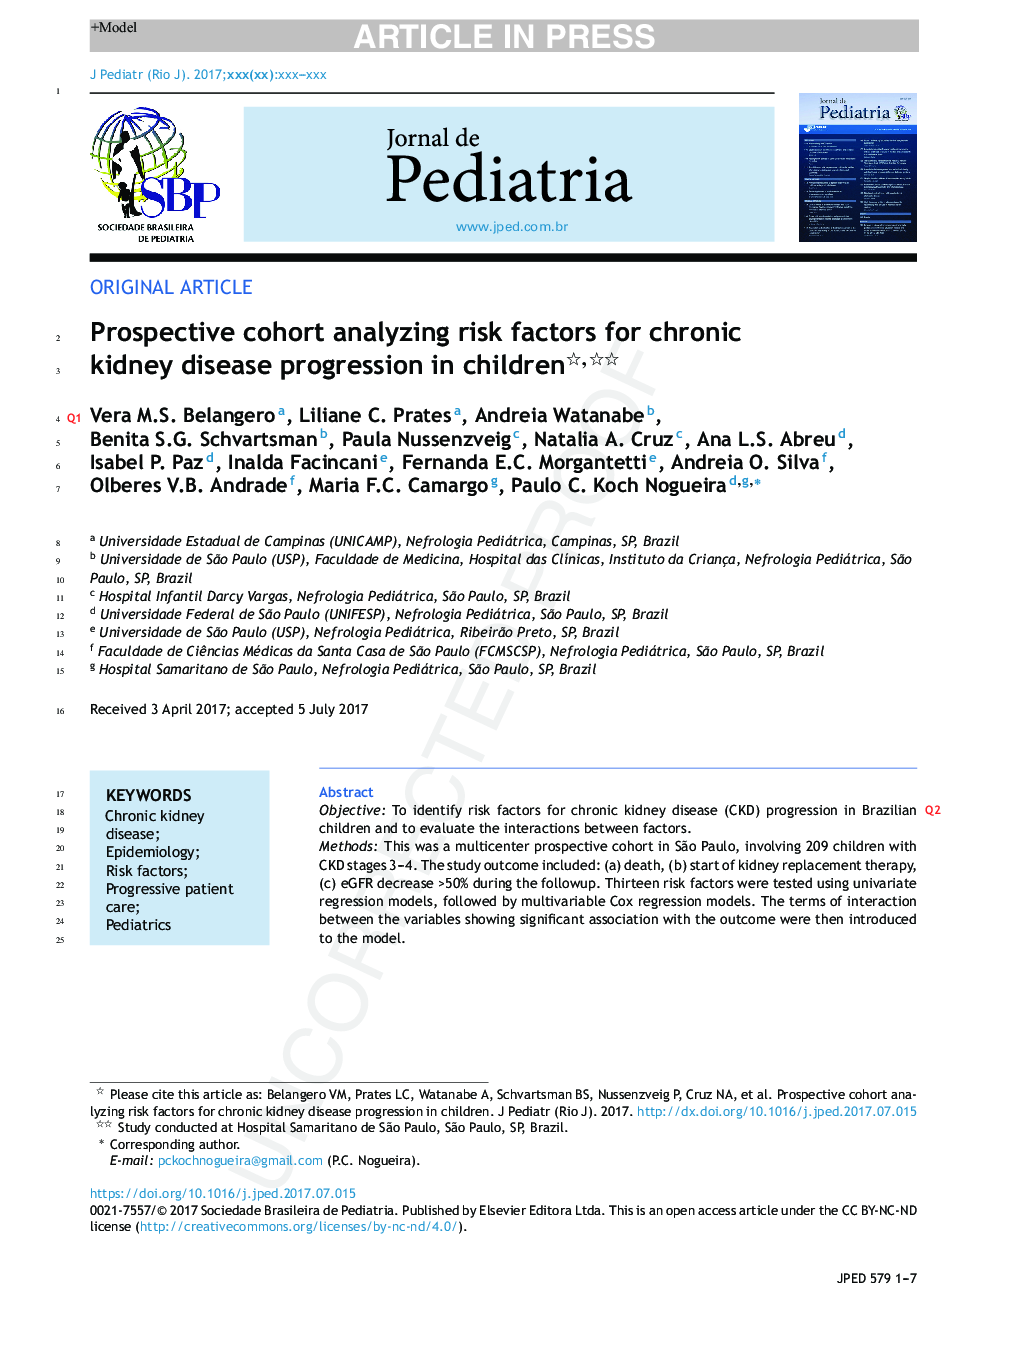 Prospective cohort analyzing risk factors for chronic kidney disease progression in children